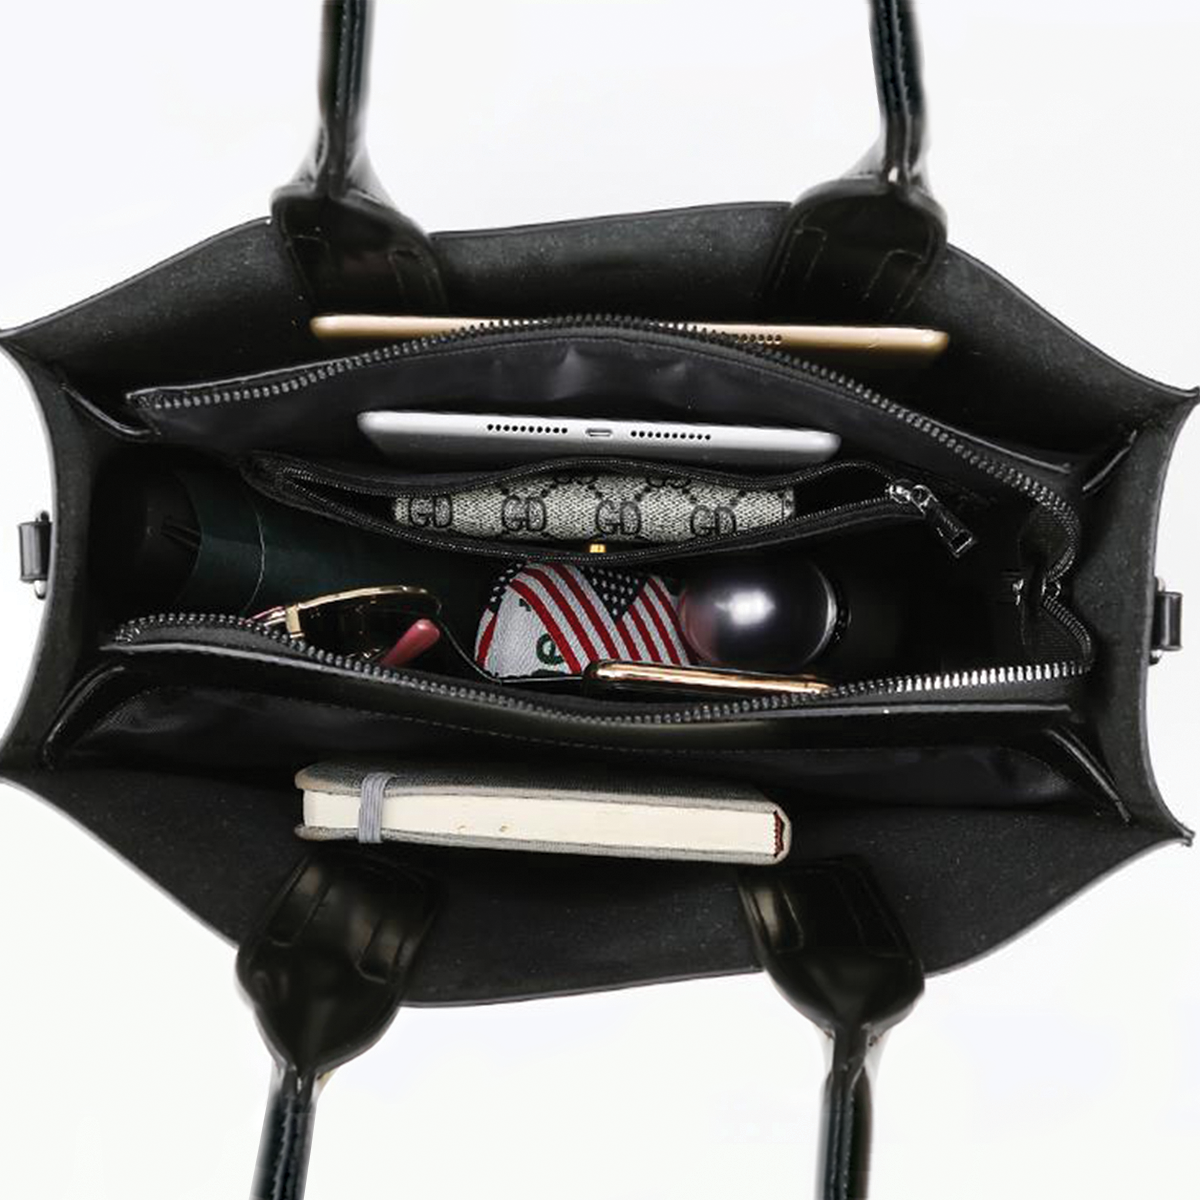 Reduce Stress At Work With English Springer Spaniel - Luxury Handbag V1